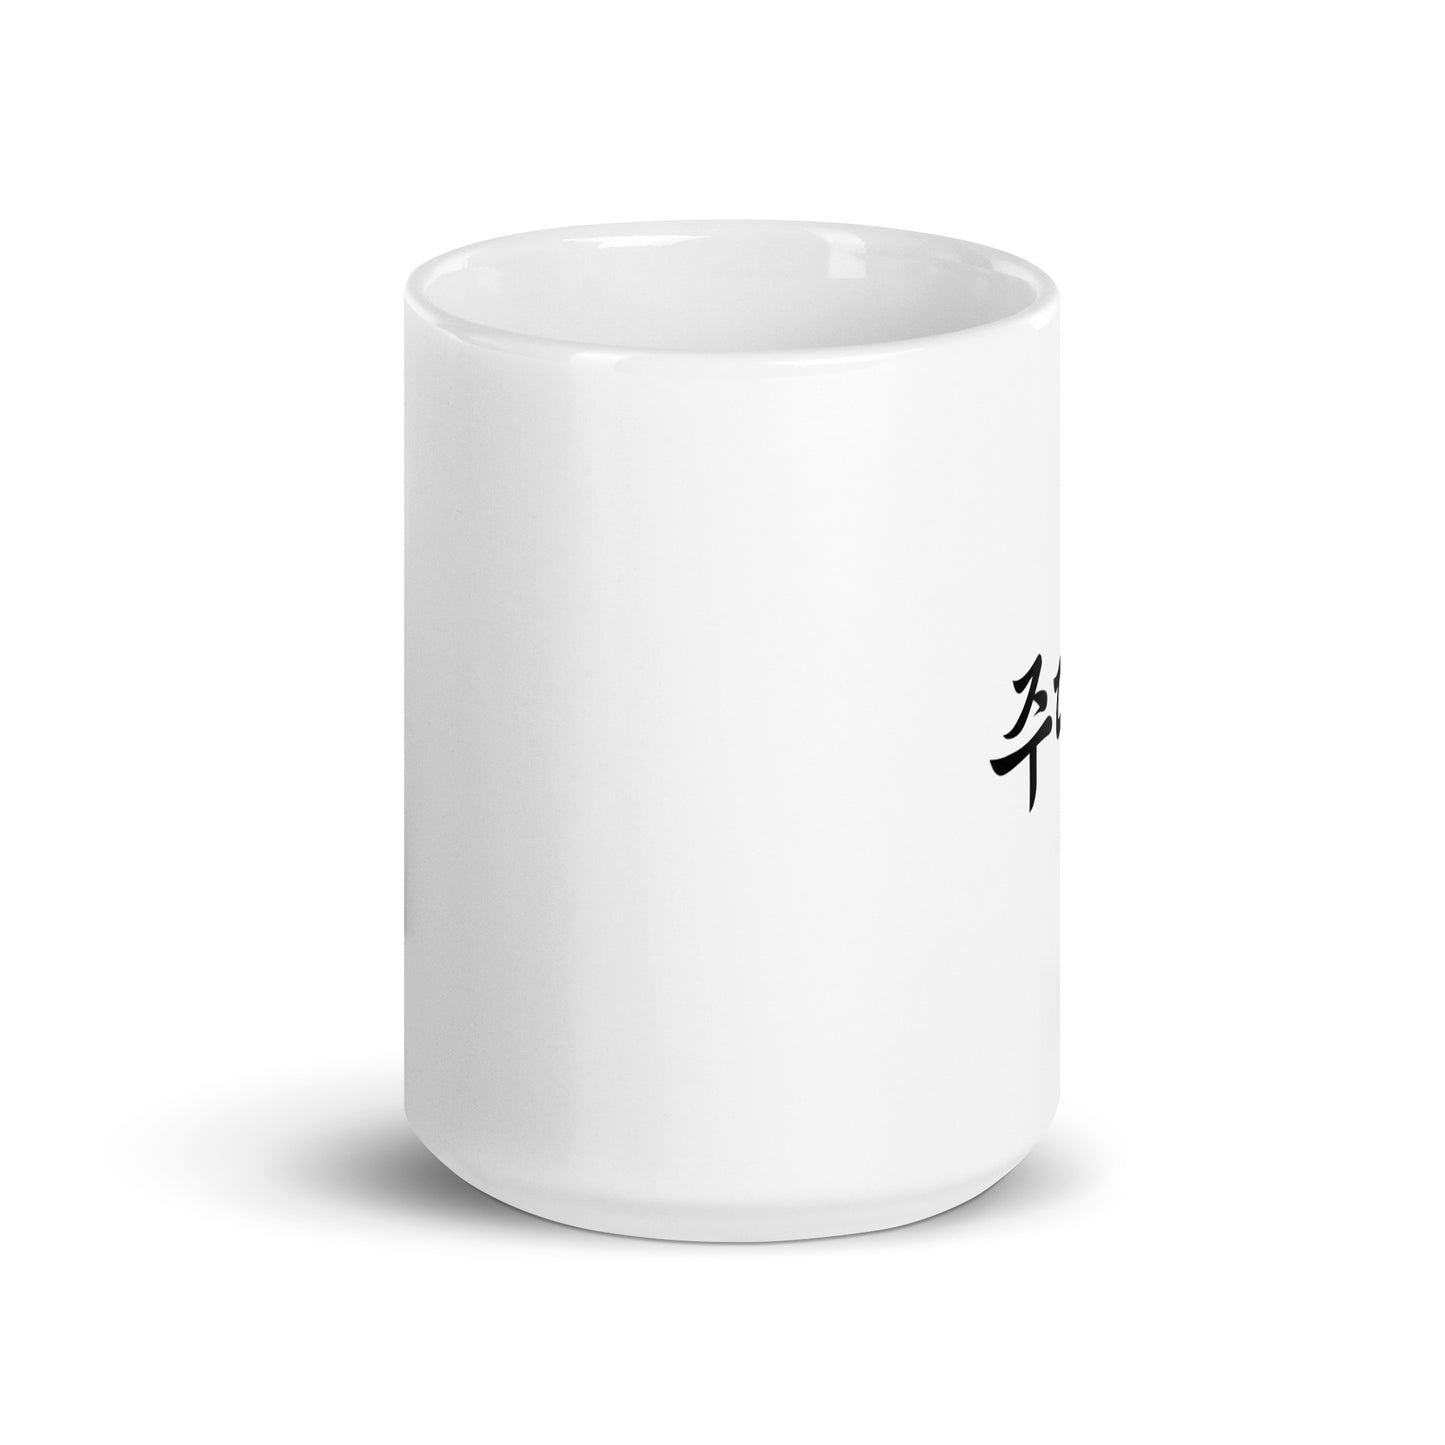 Judith in Hangul Custom Name Gift Ceramic Mug